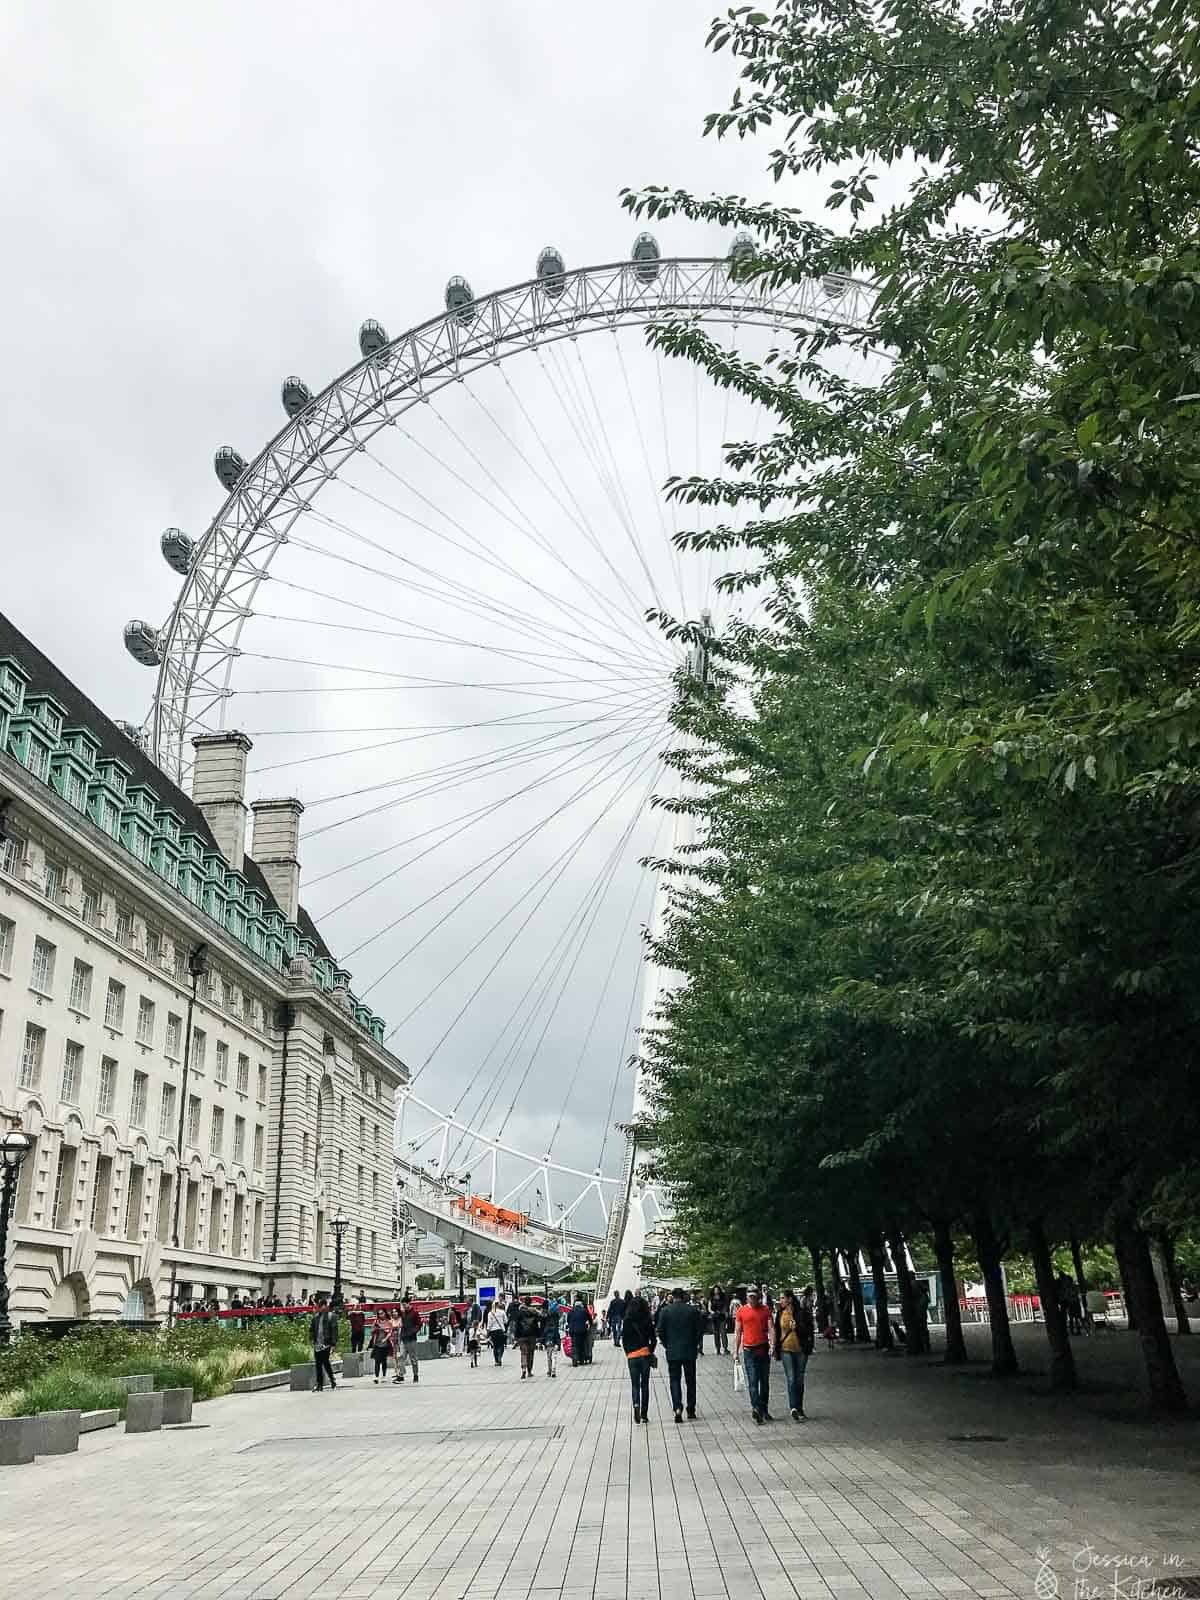 London eye in london, england. 